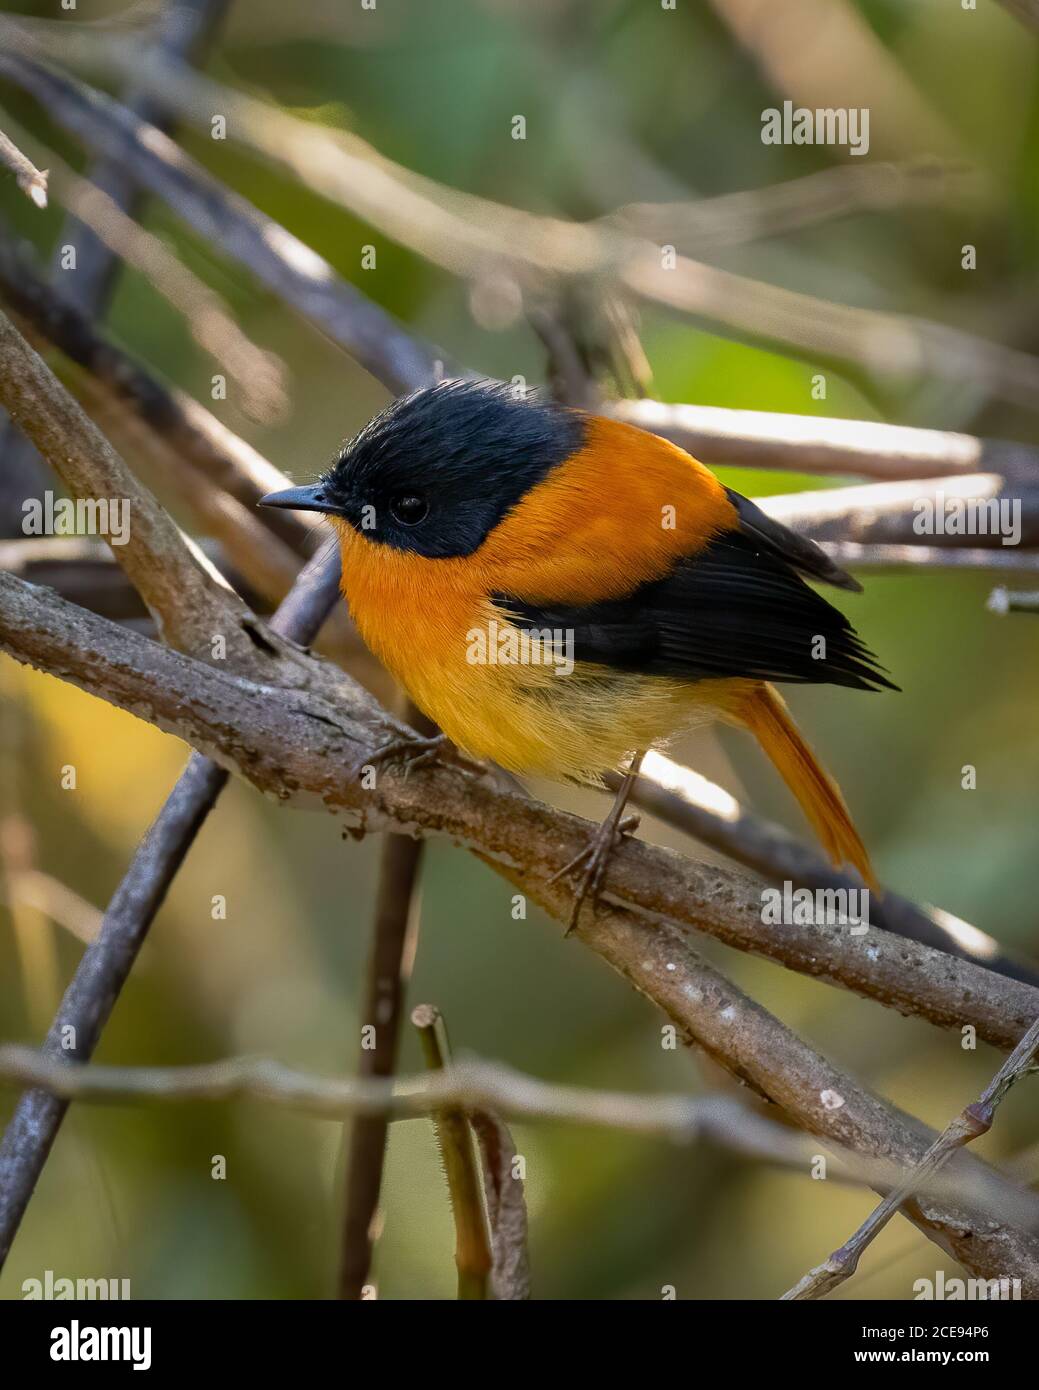 A cute little male Black and Orange Flycatcher (Ficedula nigrorufa), perched on a branch. Stock Photo